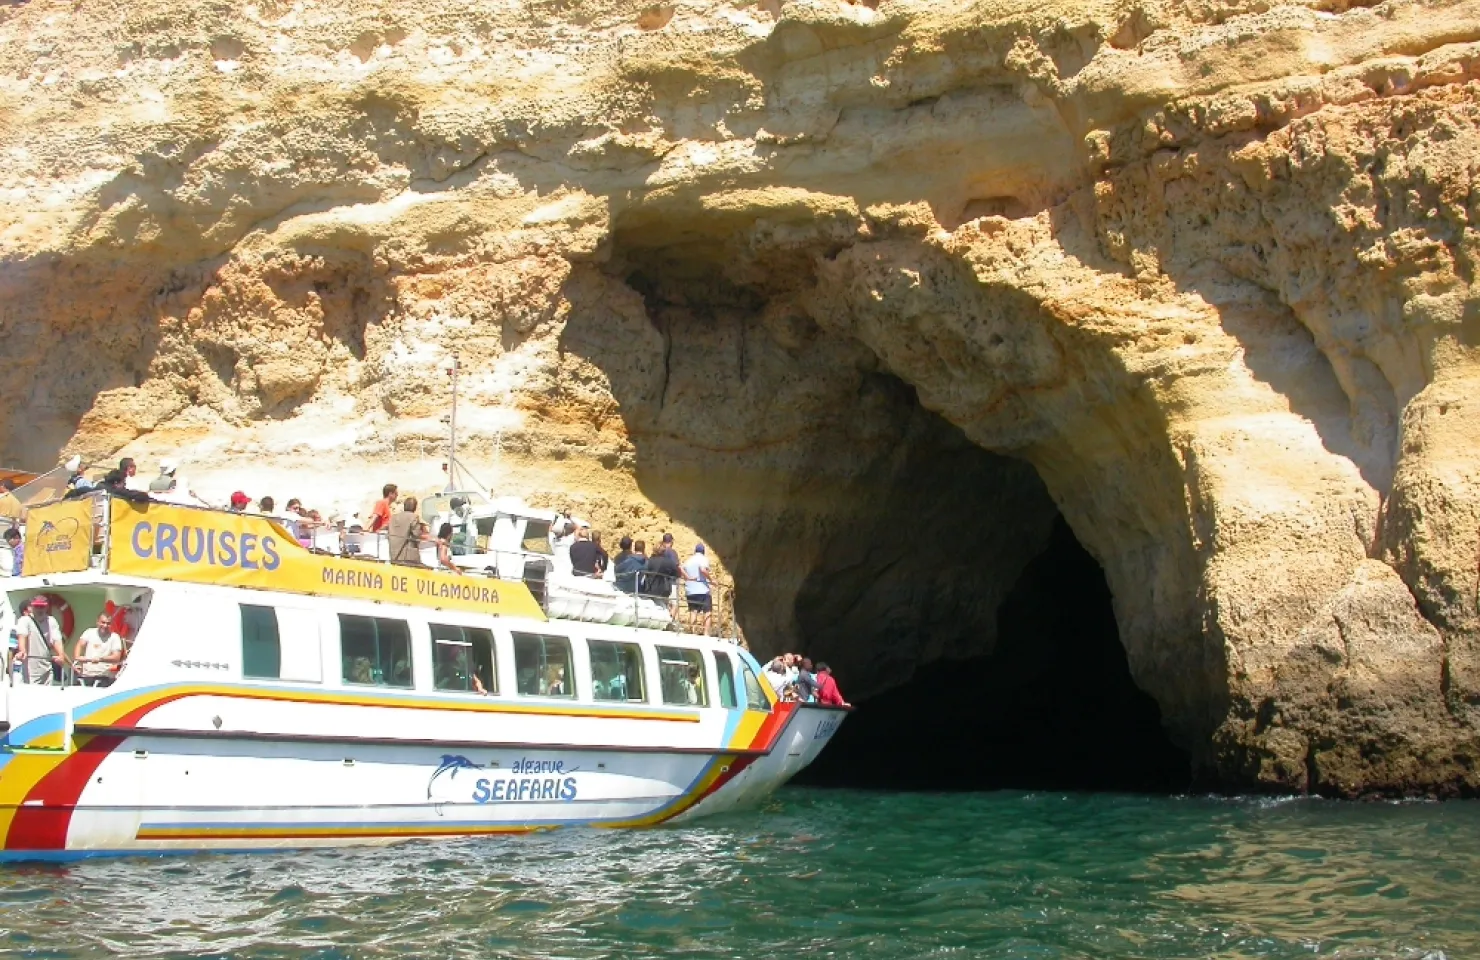 Algarve Sea Cave Tour - Algarve Boat Trips and Tours - Vilamoura 